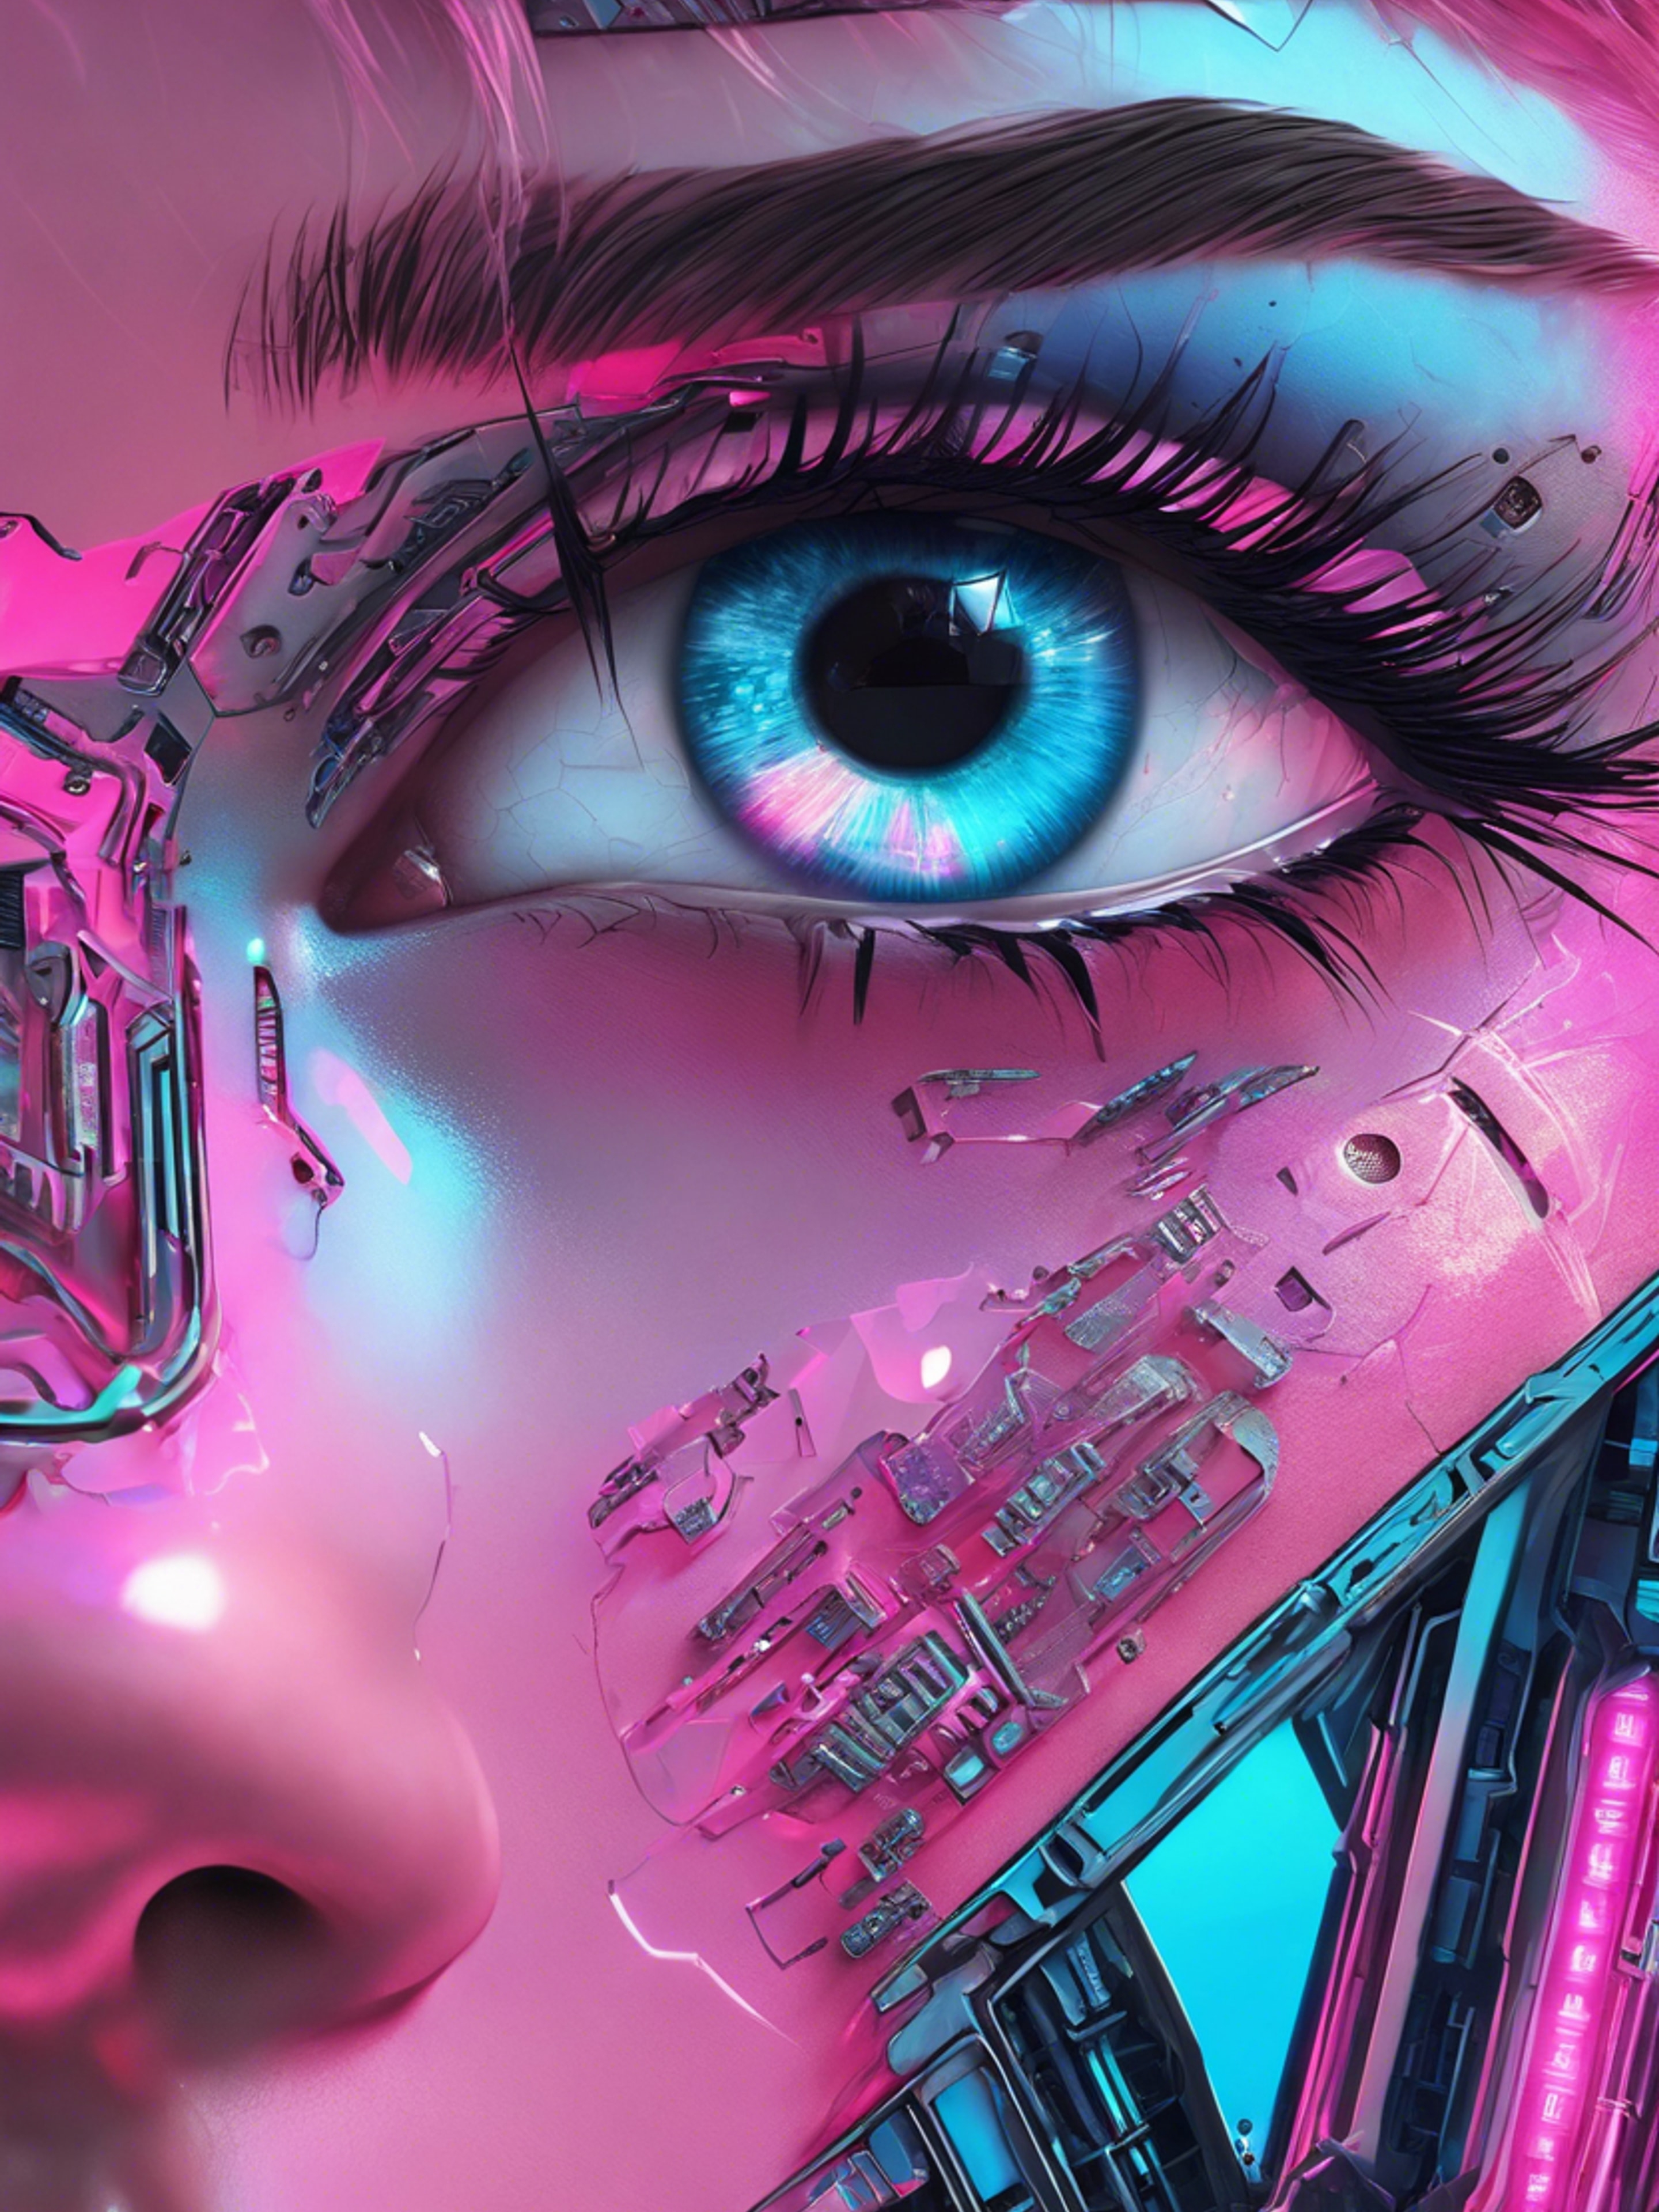 A close-up of a cyberpunk girl's eye, reflecting pink and blue city lights. Tapeta[805009a14d1a4c10afac]